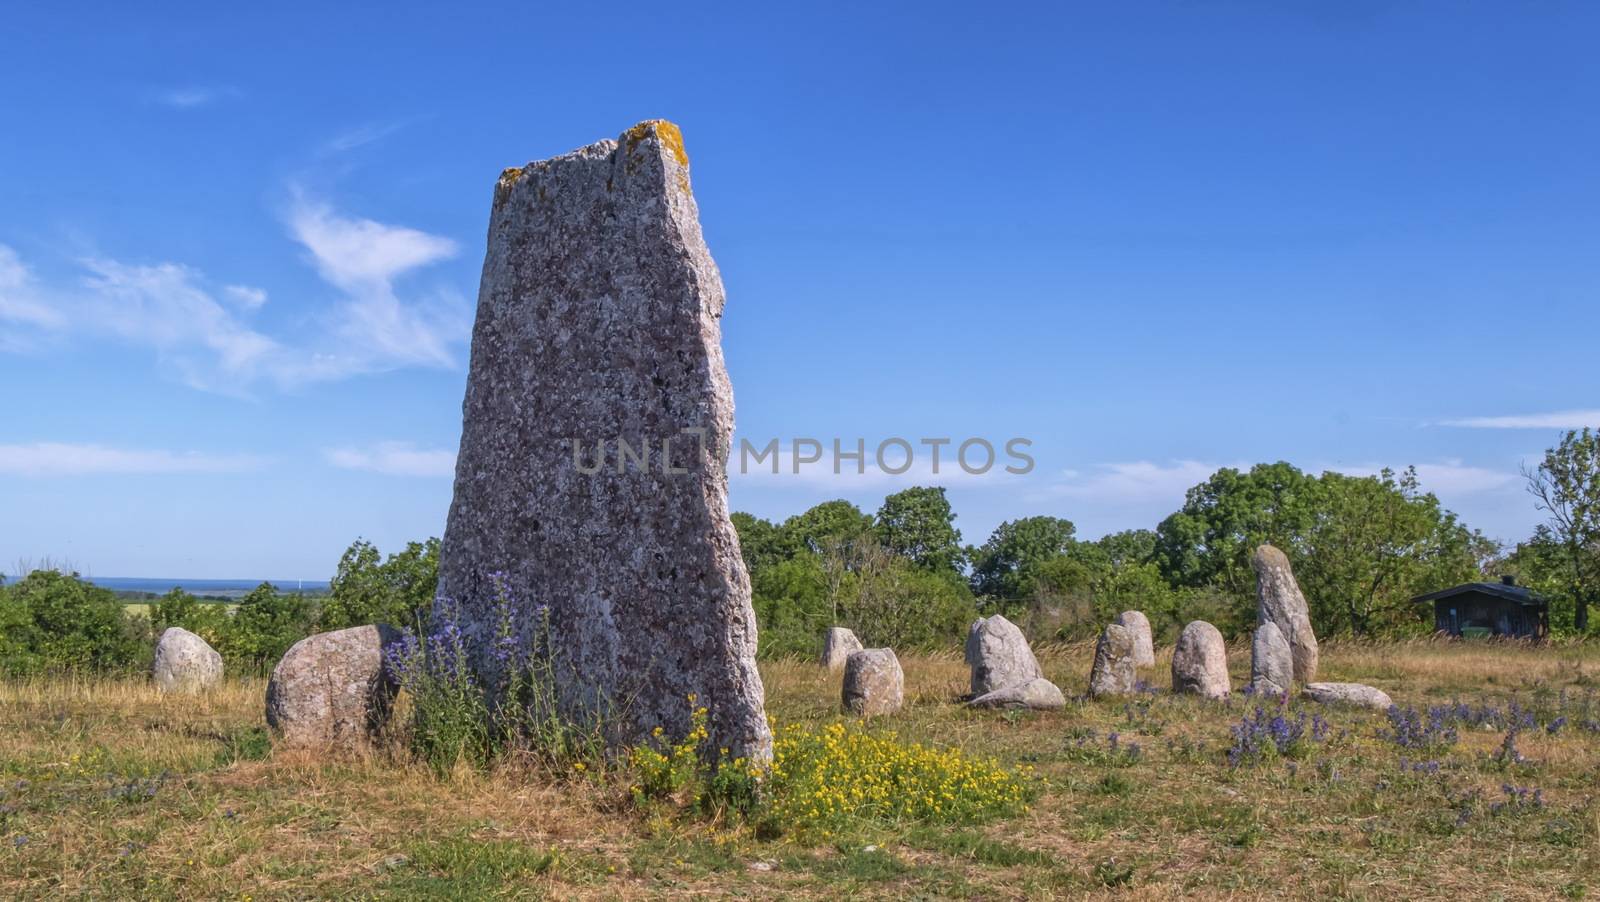 Viking stone ship burial in Oland island, Gettlinge, Sweden by Elenaphotos21